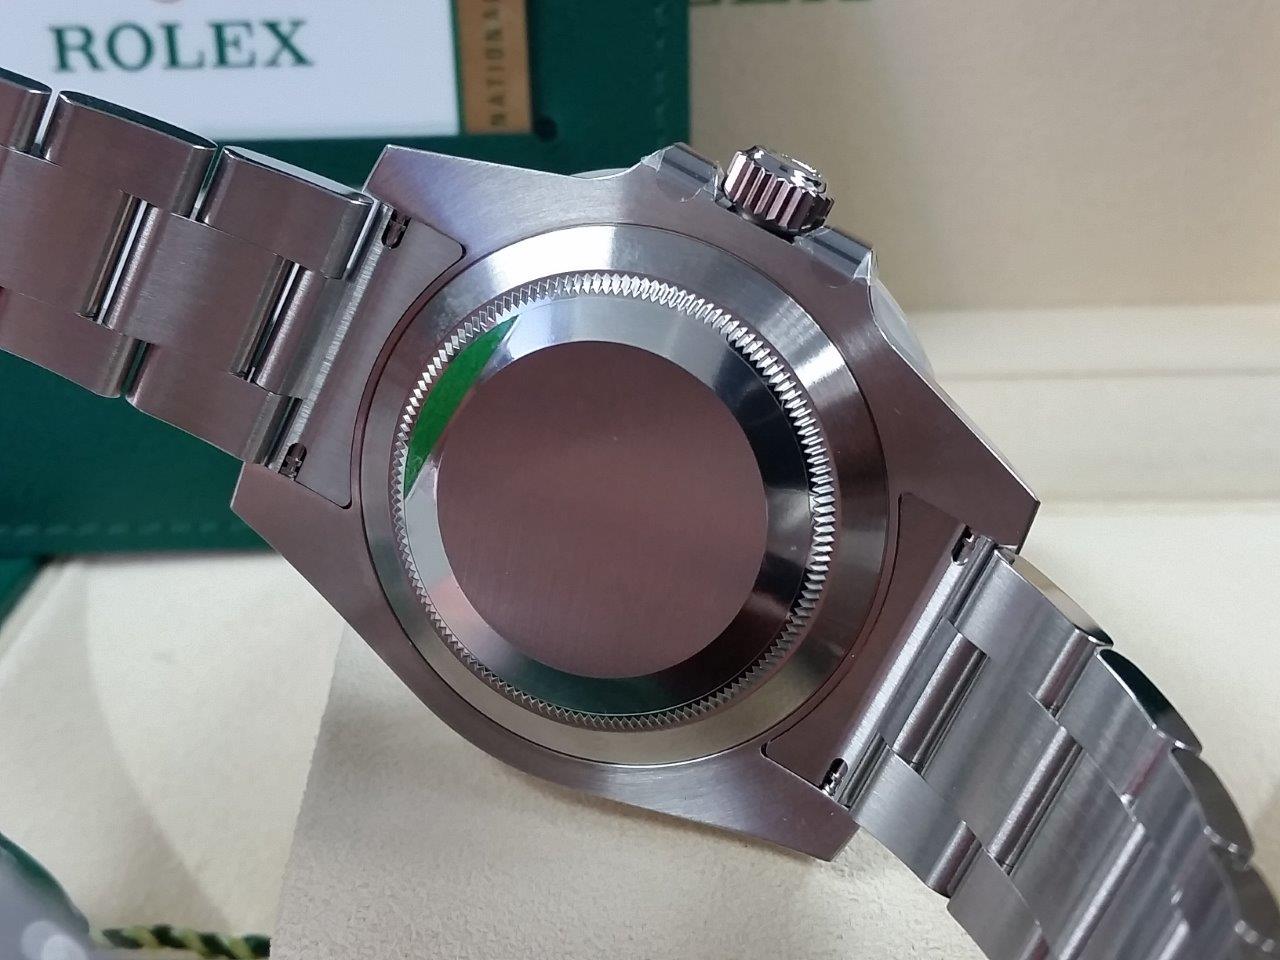 Rolex Submariner Date 116610LV Green Dial/Bezel Ceramic HULK w/Stickers Brand New